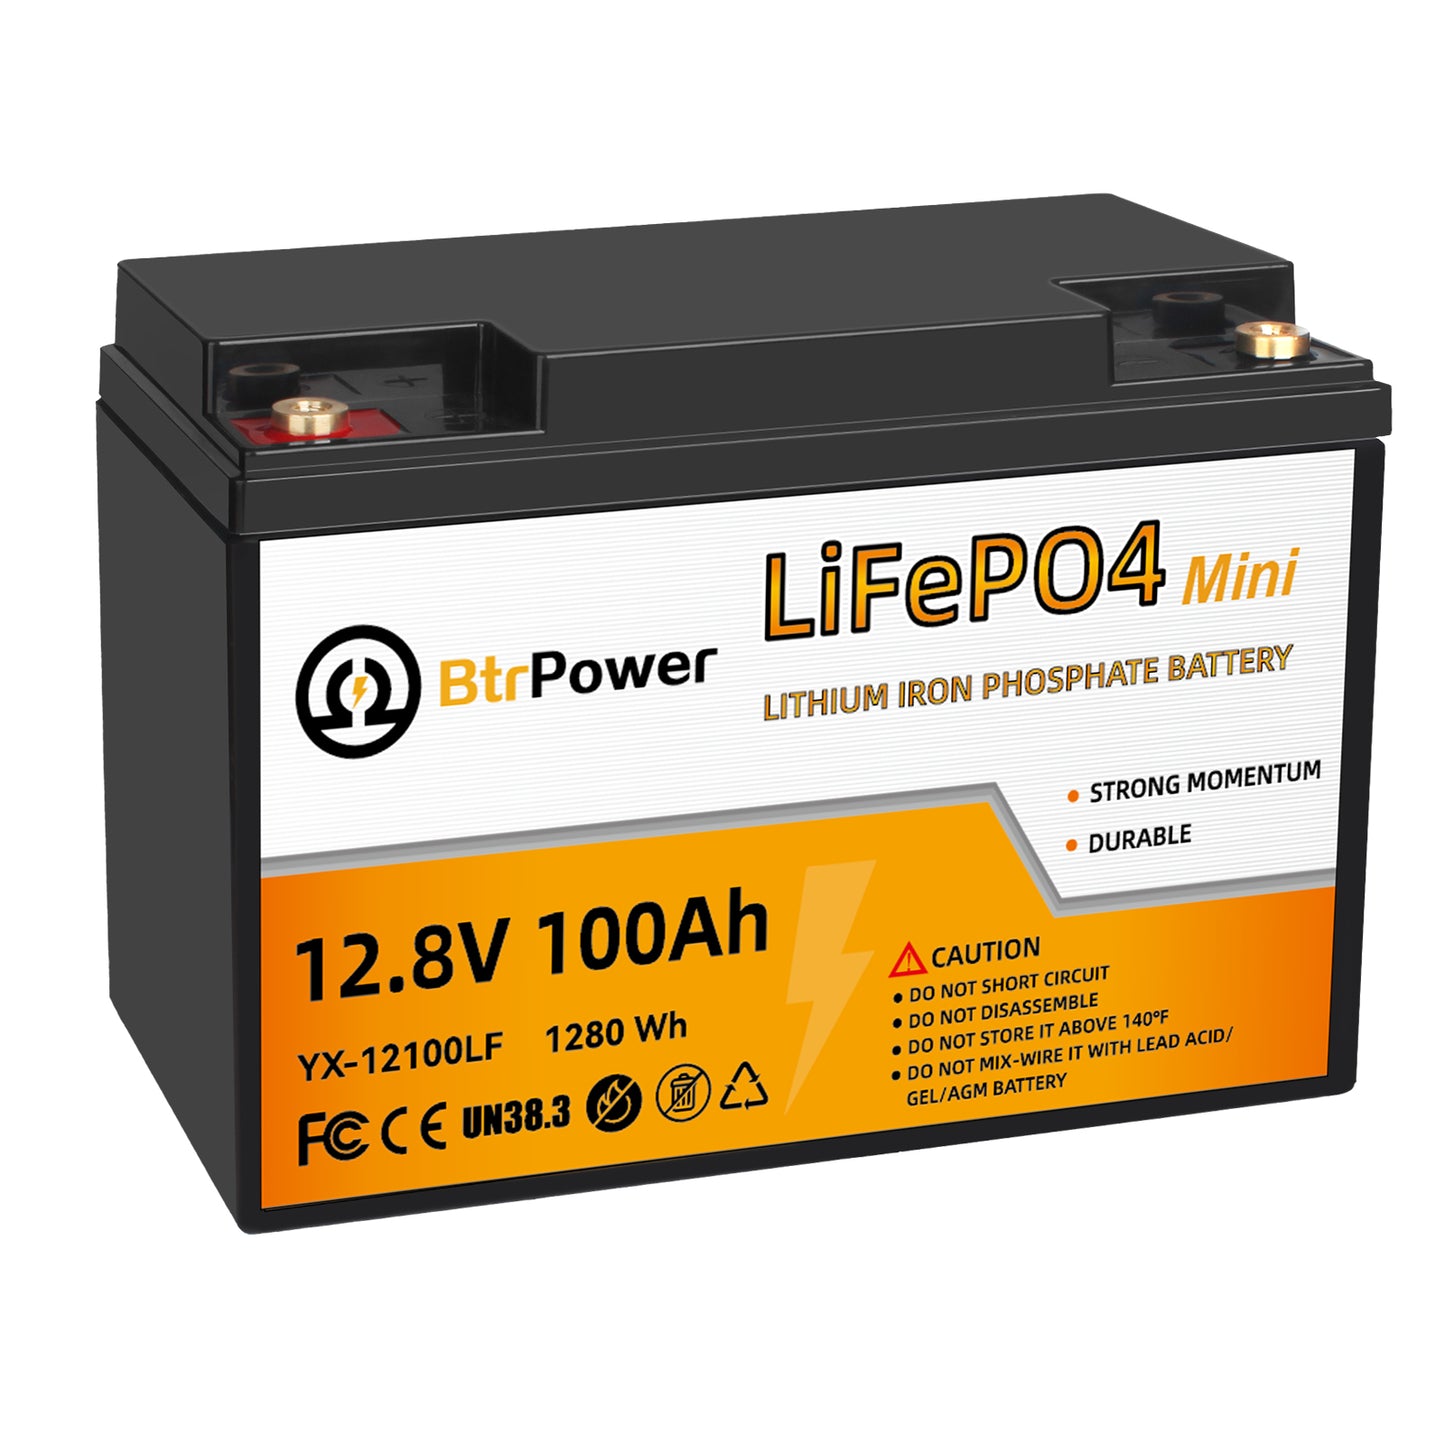 12V 100Ah Gruppe 24 LiFePO4 Lithium-Batterie eingebaute 100A BMS, 1280Wh Energie